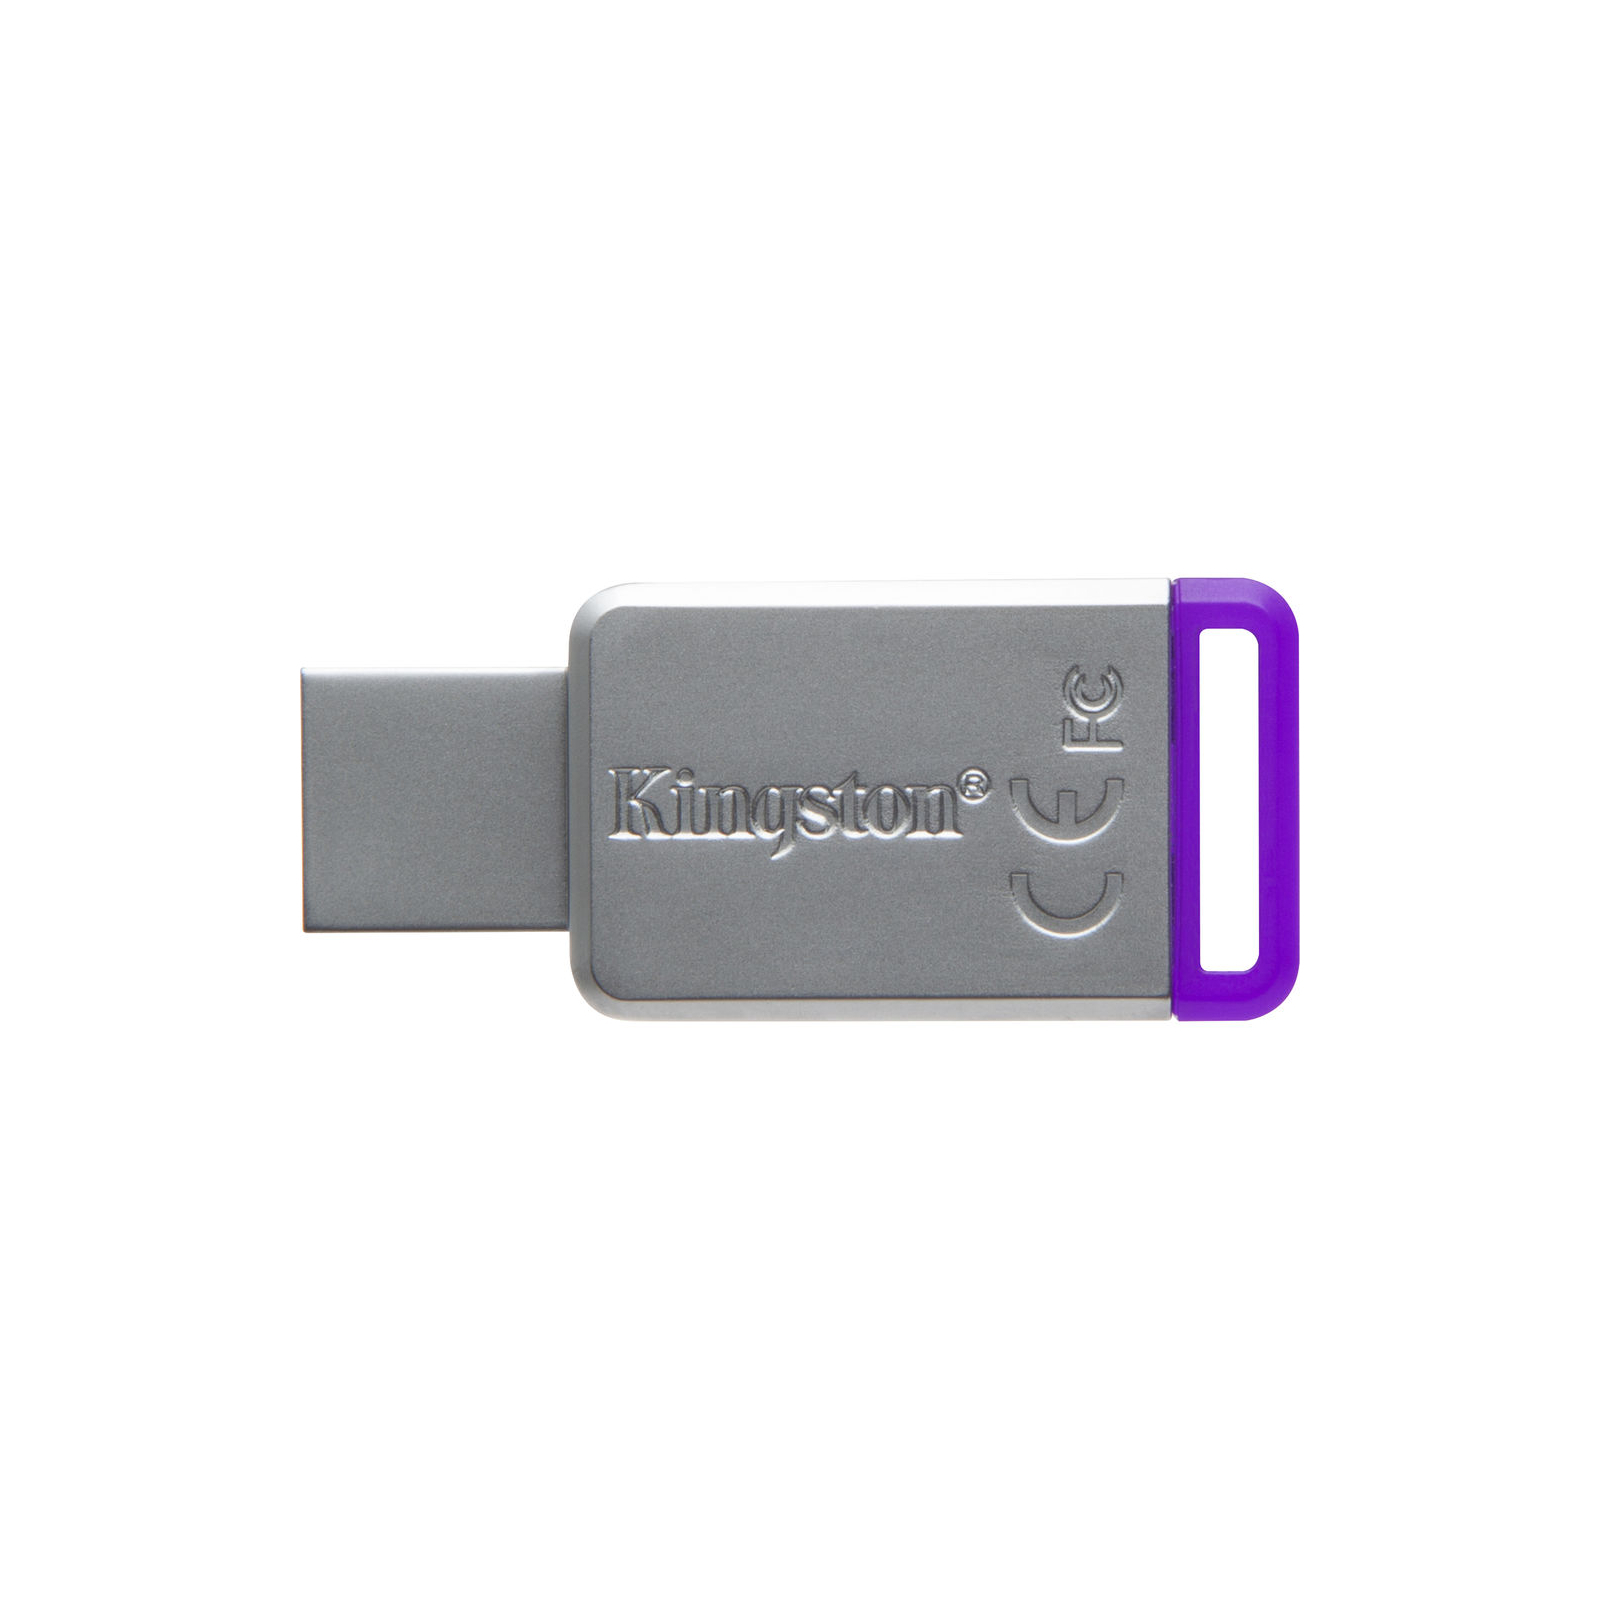 USB флеш накопитель Kingston 16GB DT50 USB 3.1 (DT50/16GB) изображение 3